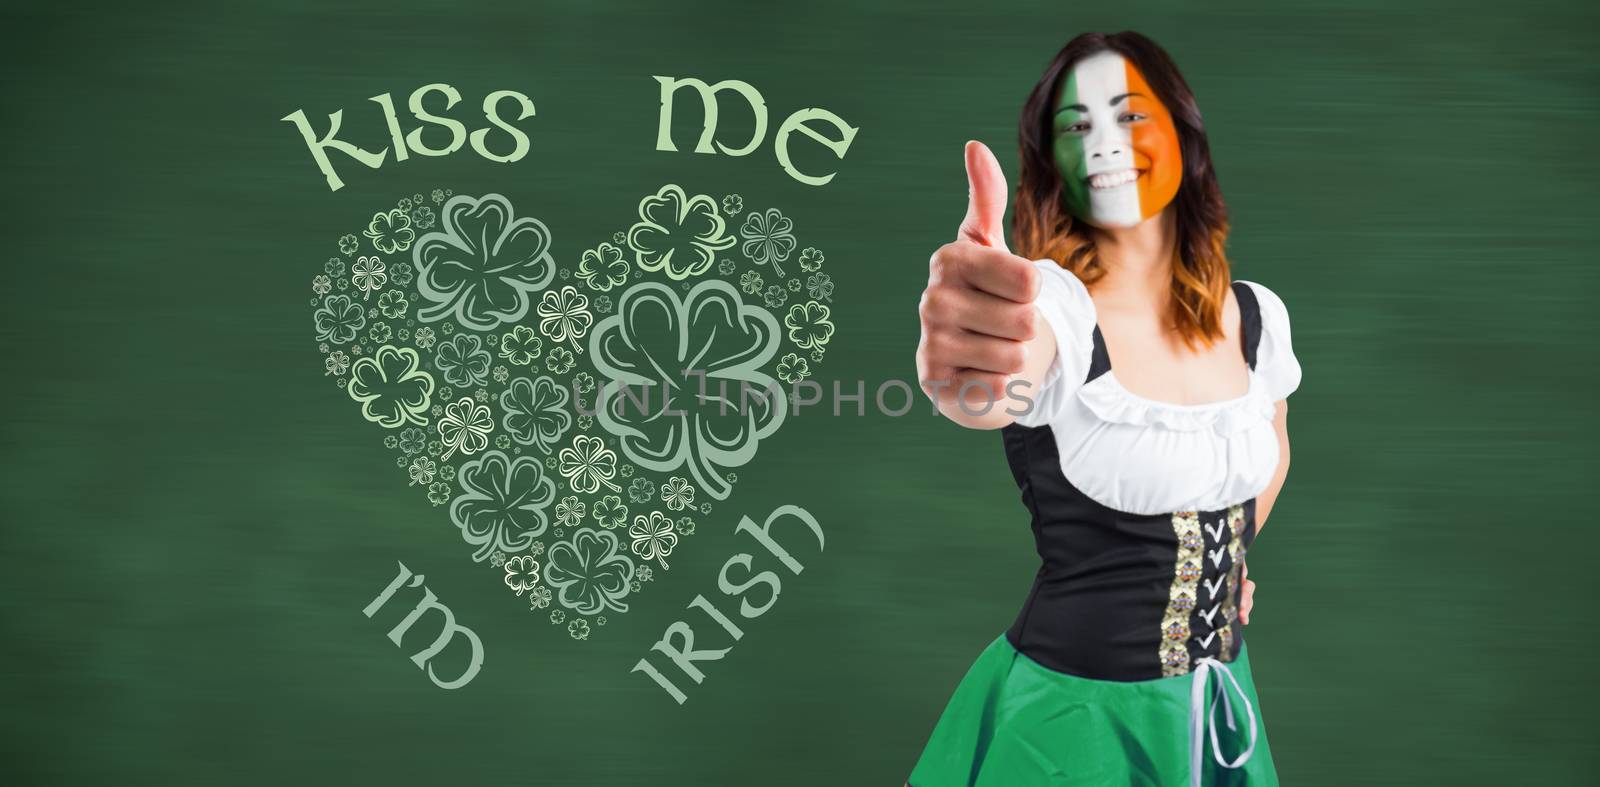 Irish girl showing thumbs up against green chalkboard